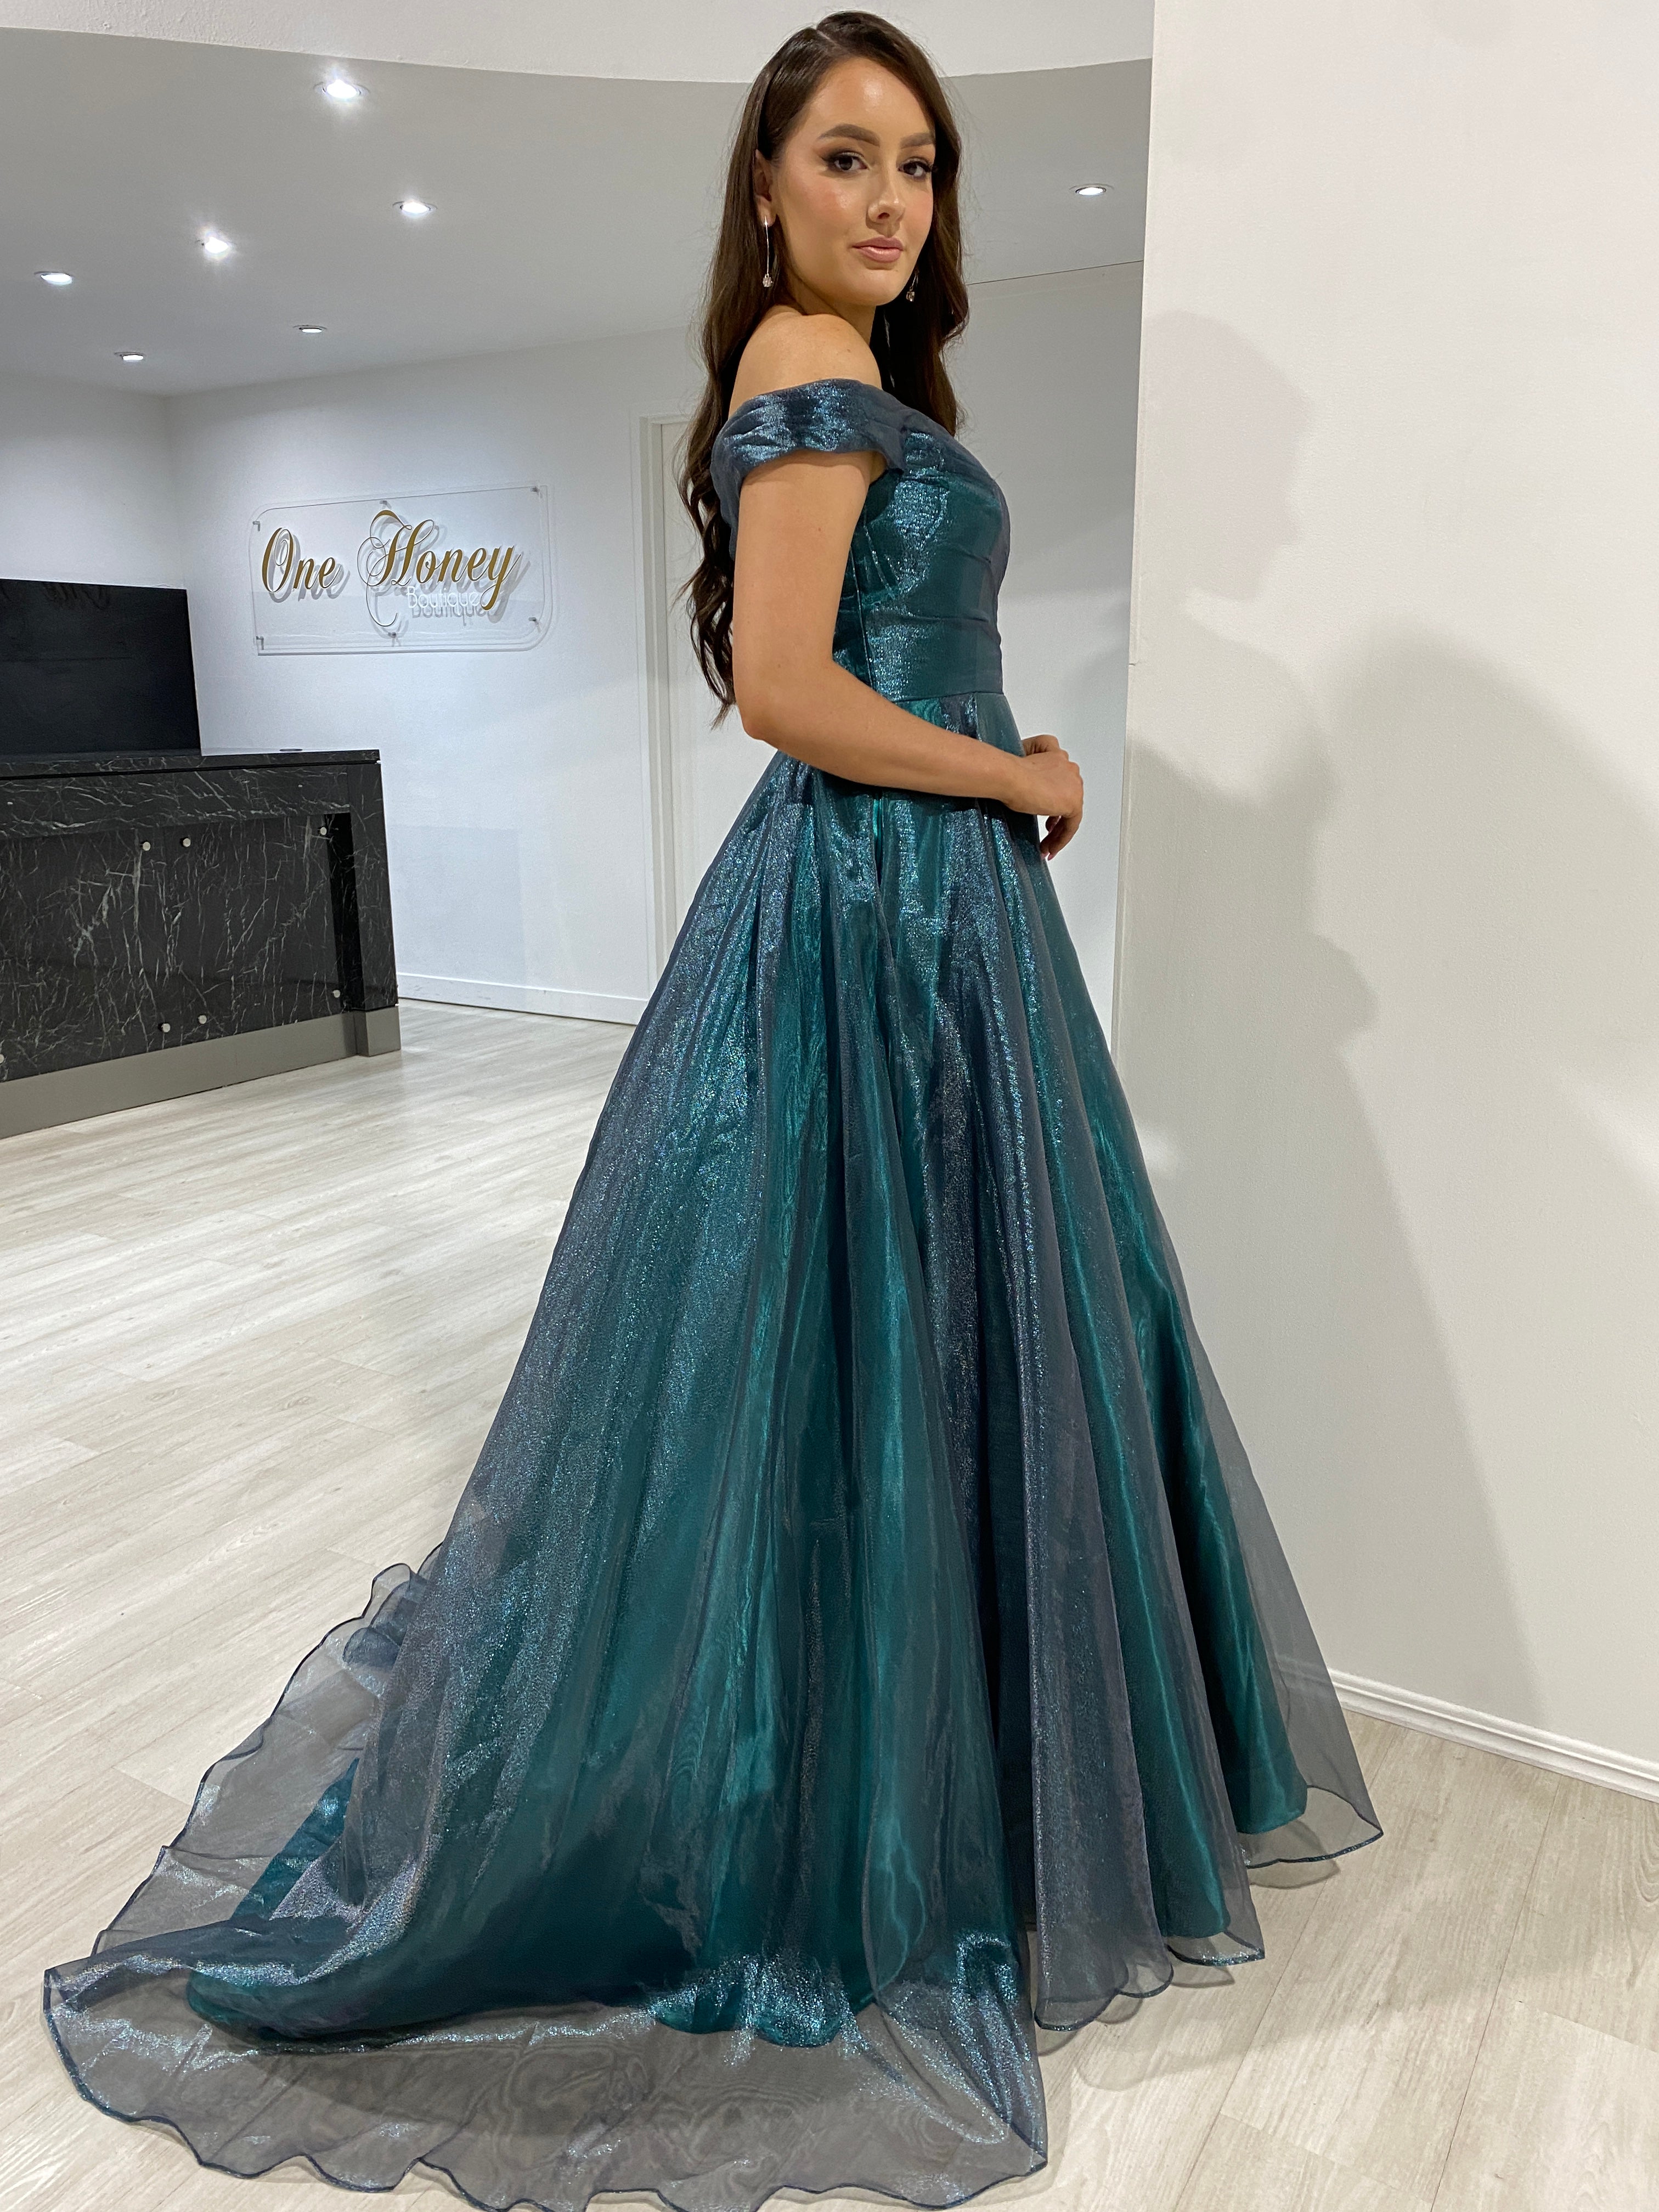 Honey Couture SARIA Emerald Green Shimmer Ballgown Formal Dress